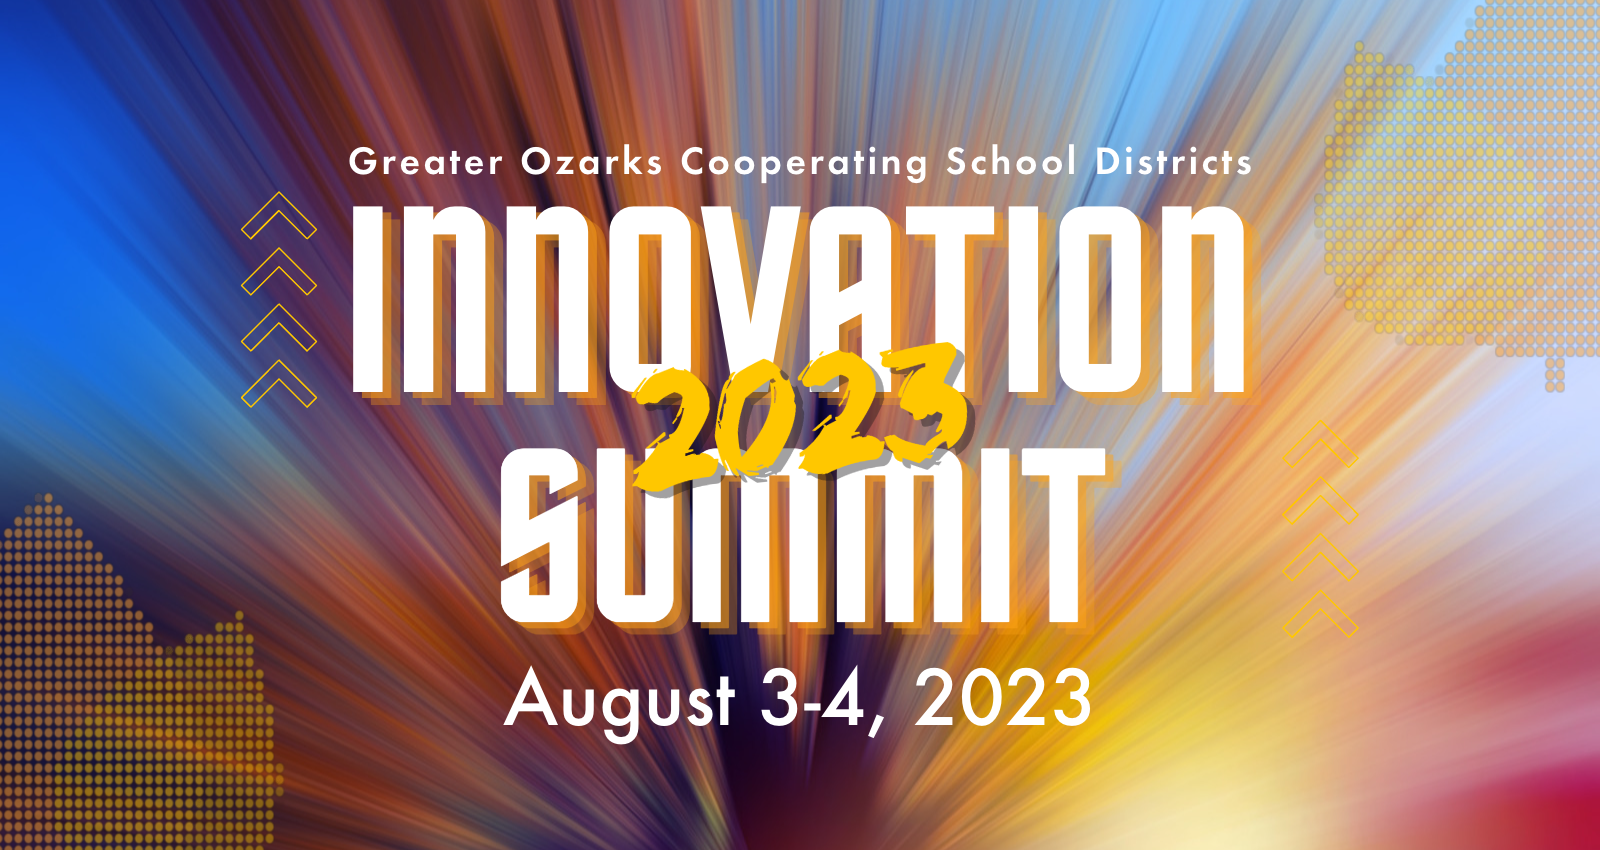 Innovation Summit 2023